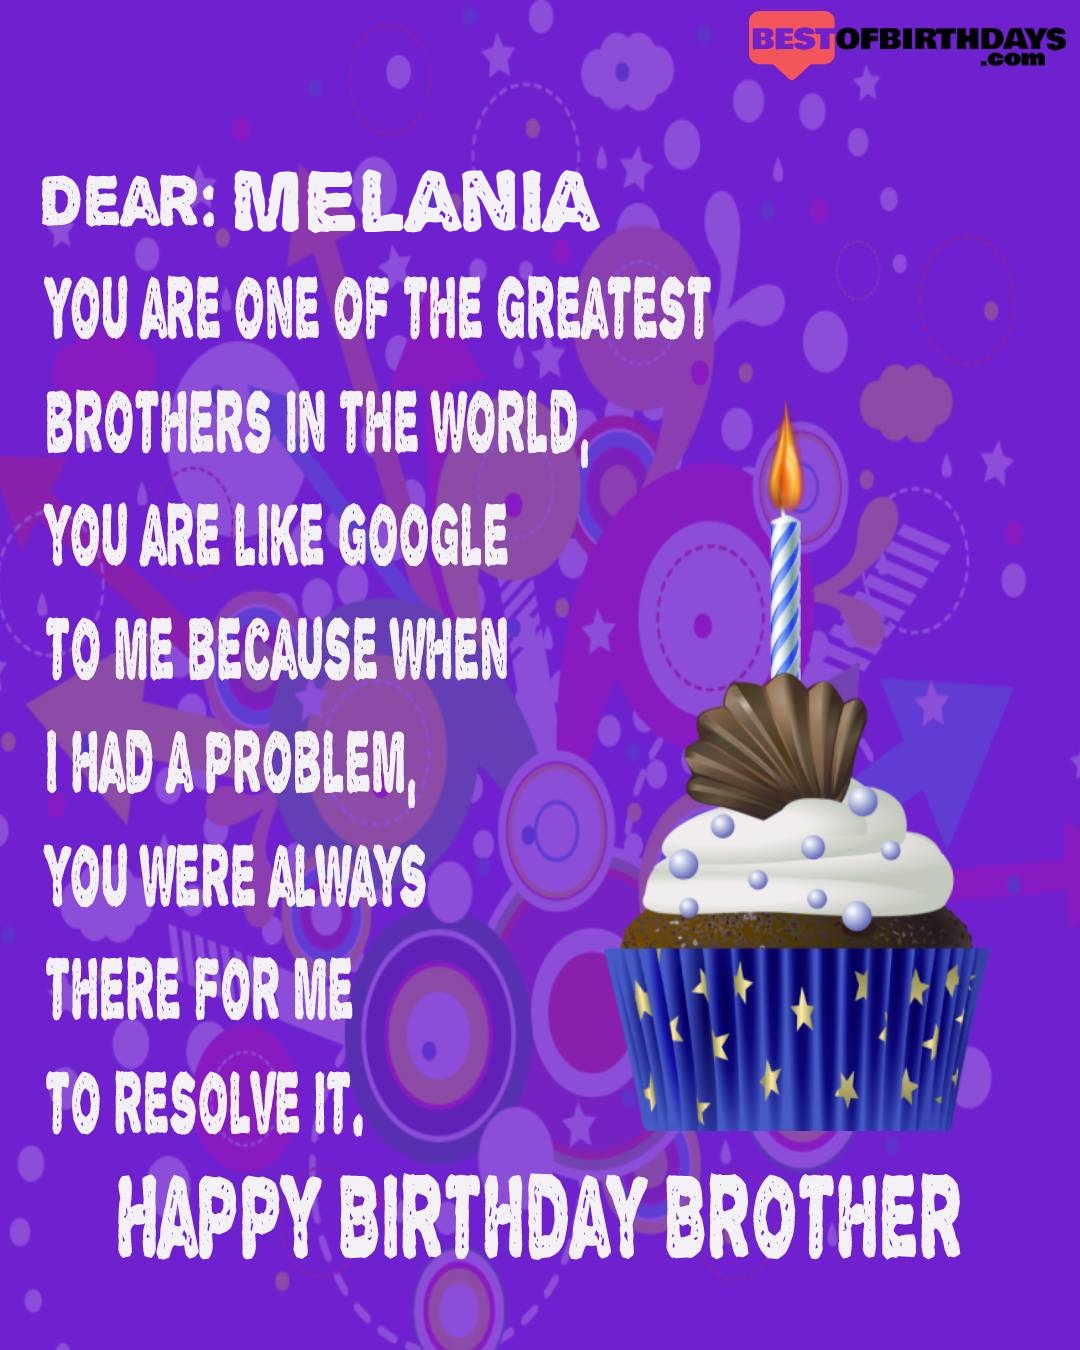 Happy birthday melania bhai brother bro